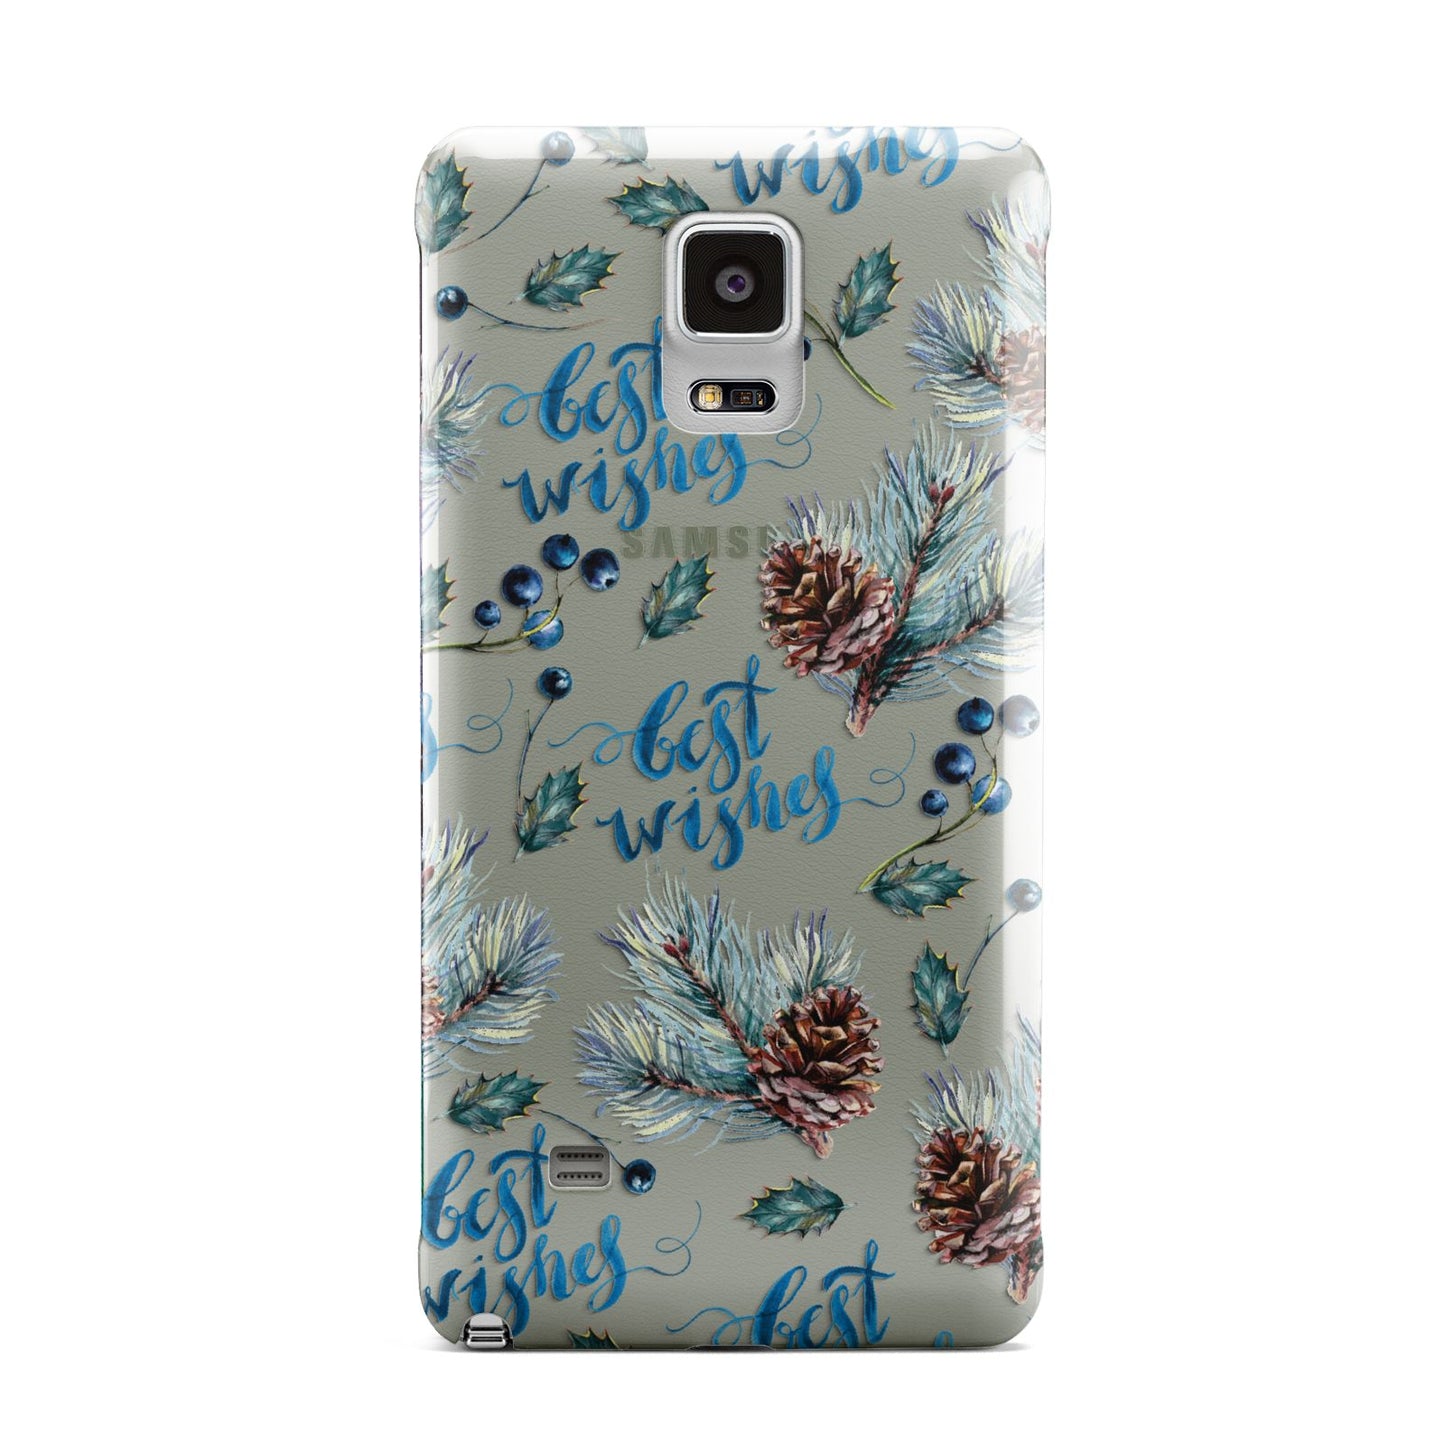 Pine cones wild berries Samsung Galaxy Note 4 Case